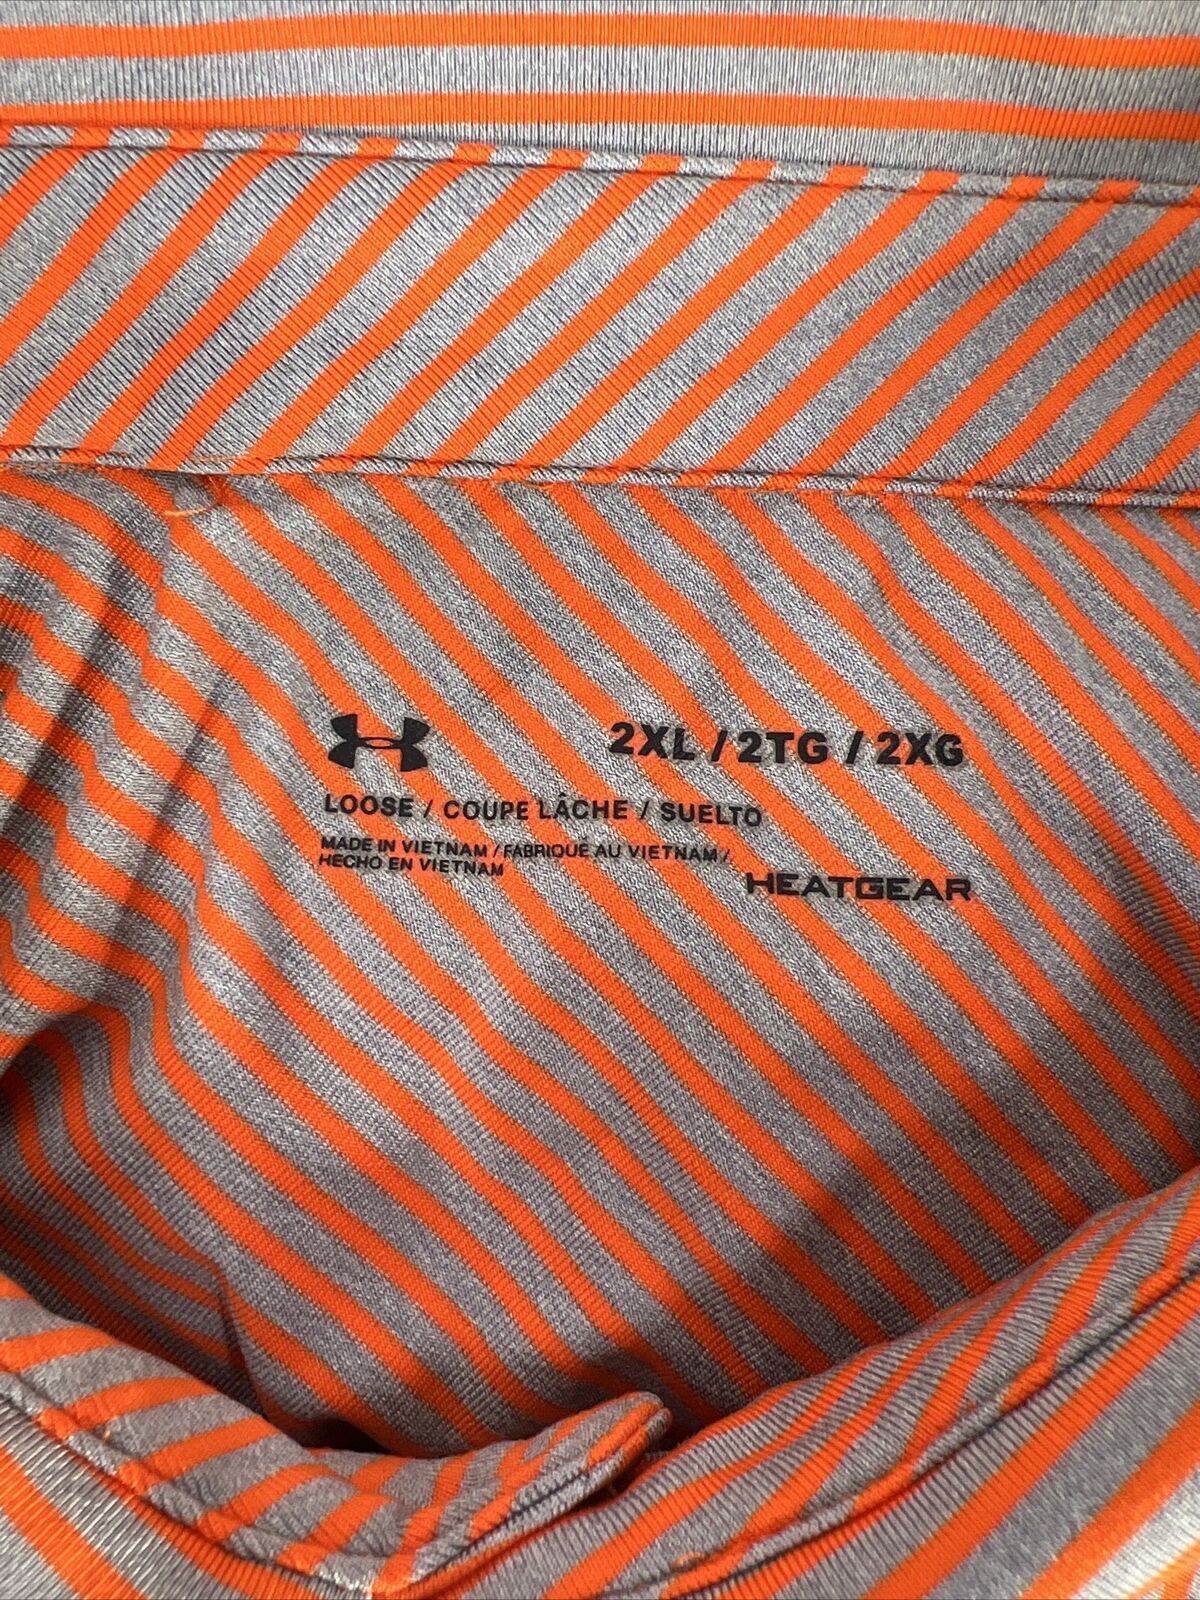 Under Armour Men's Orange Striped HeatGear Golf Polo Shirt - 2XL